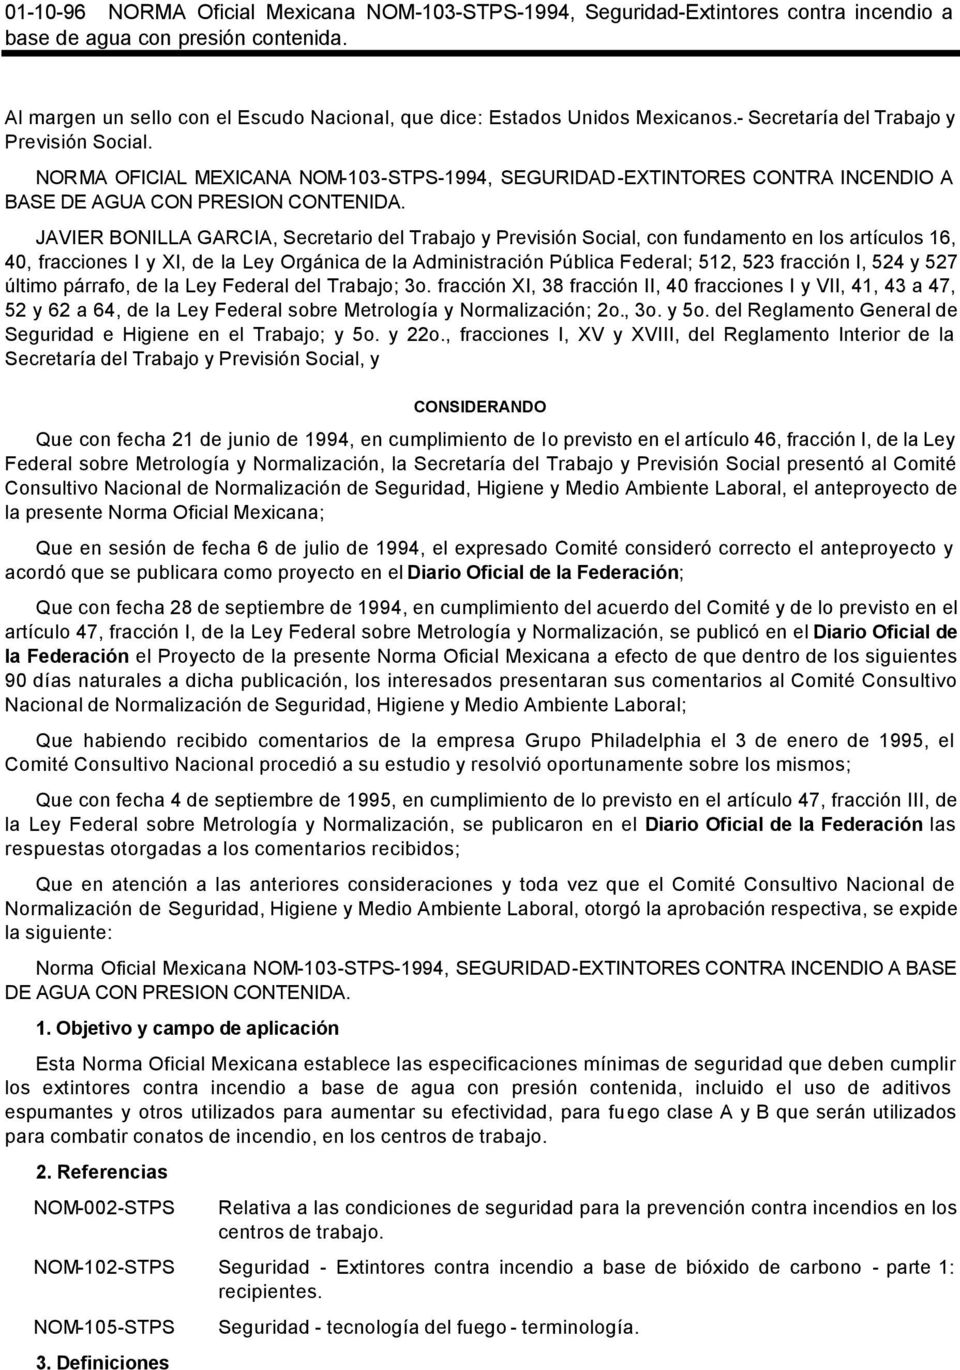 NORMA OFICIAL MEXICANA NOM-103-STPS-1994, SEGURIDAD-EXTINTORES CONTRA INCENDIO A BASE DE AGUA CON PRESION CONTENIDA.